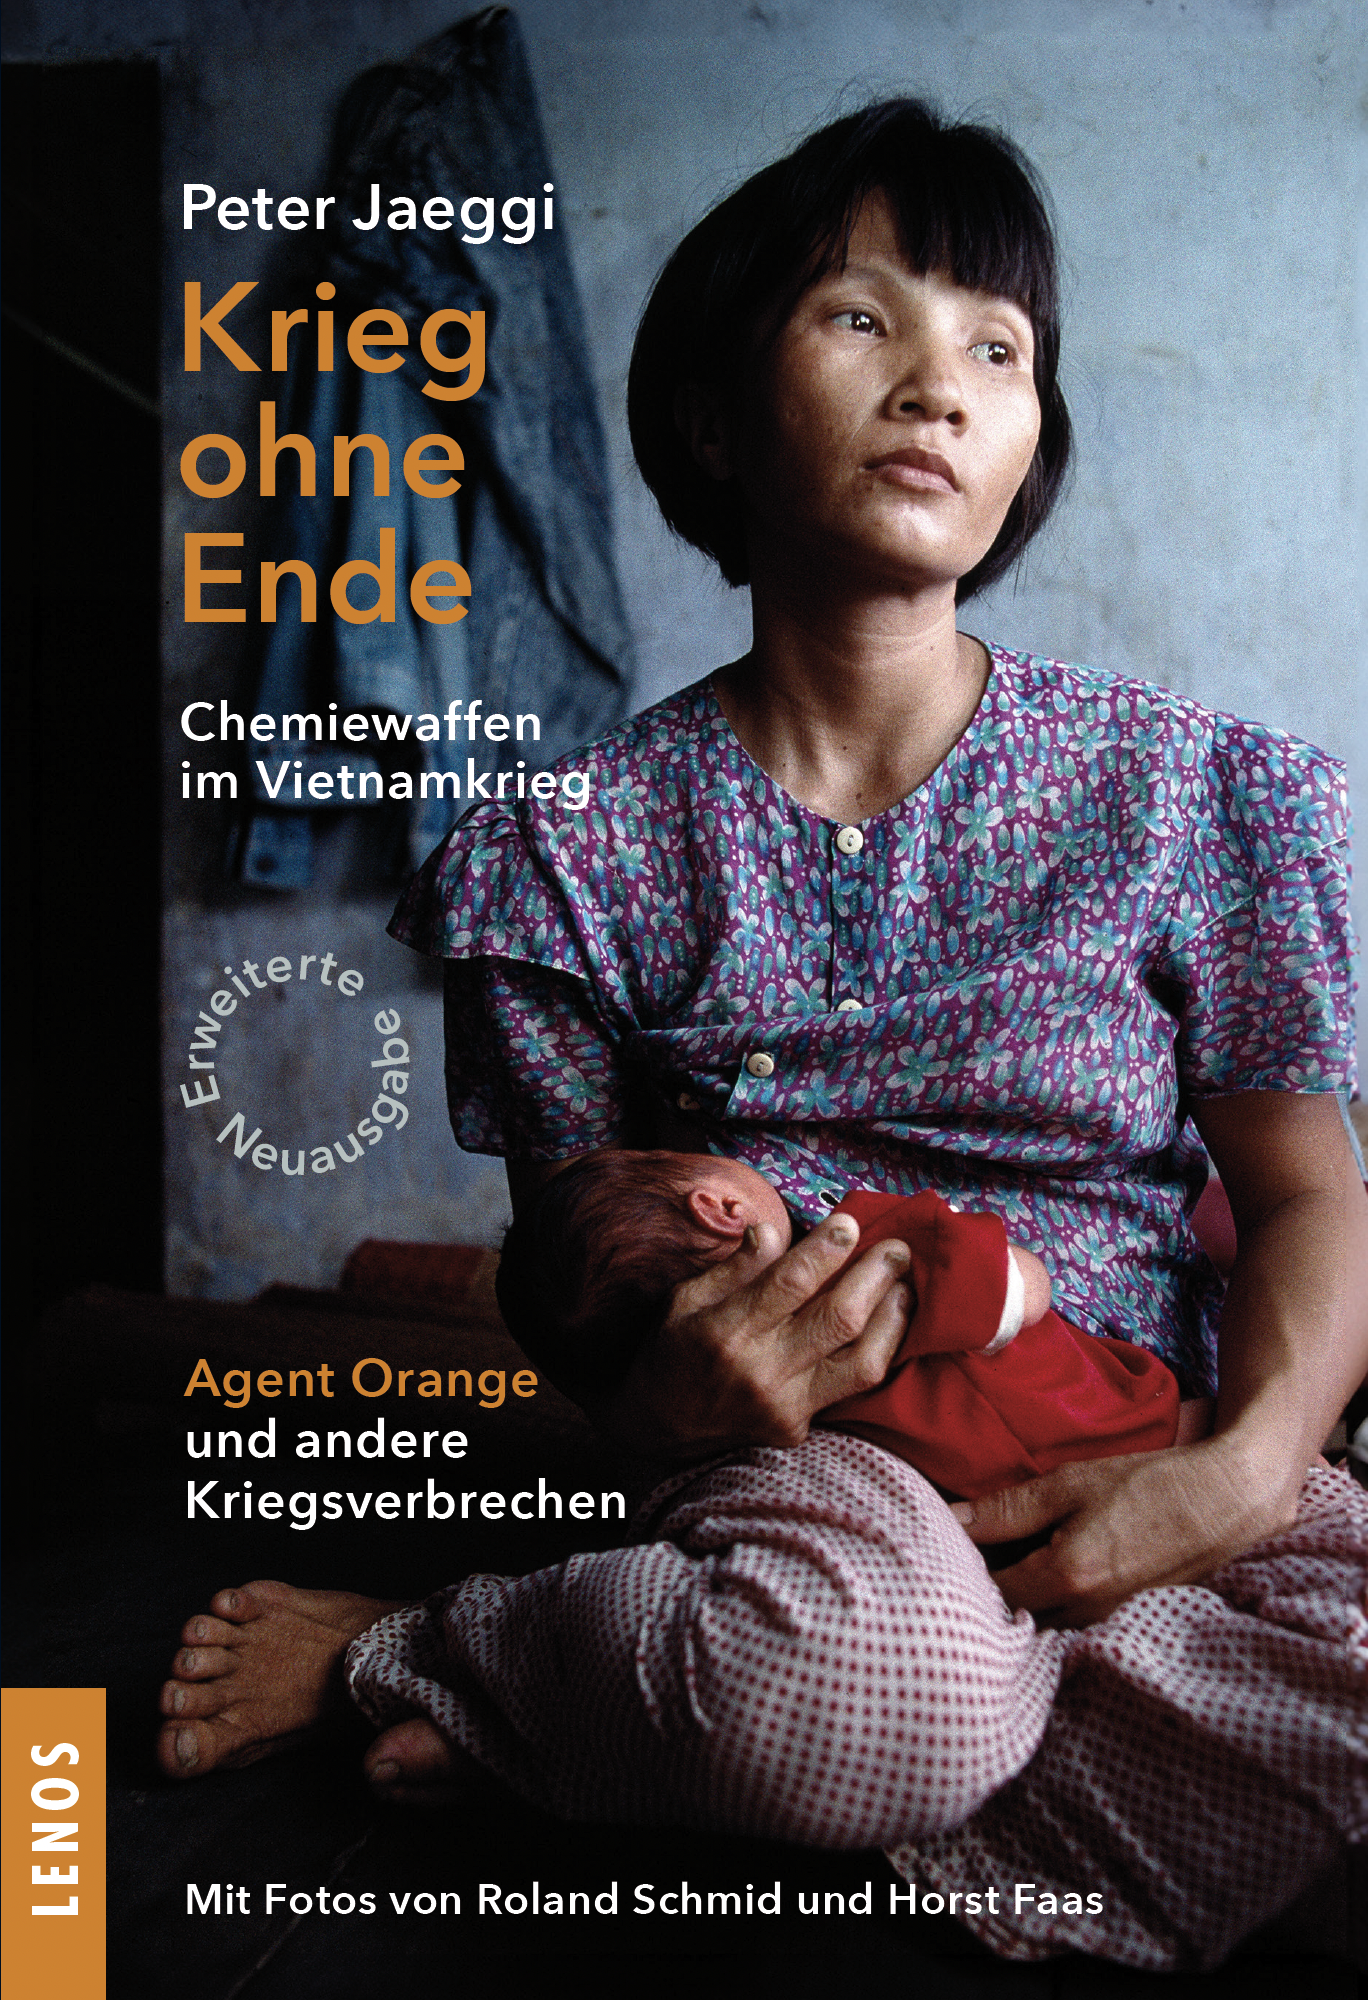 (c) Agentorange-vietnam.org